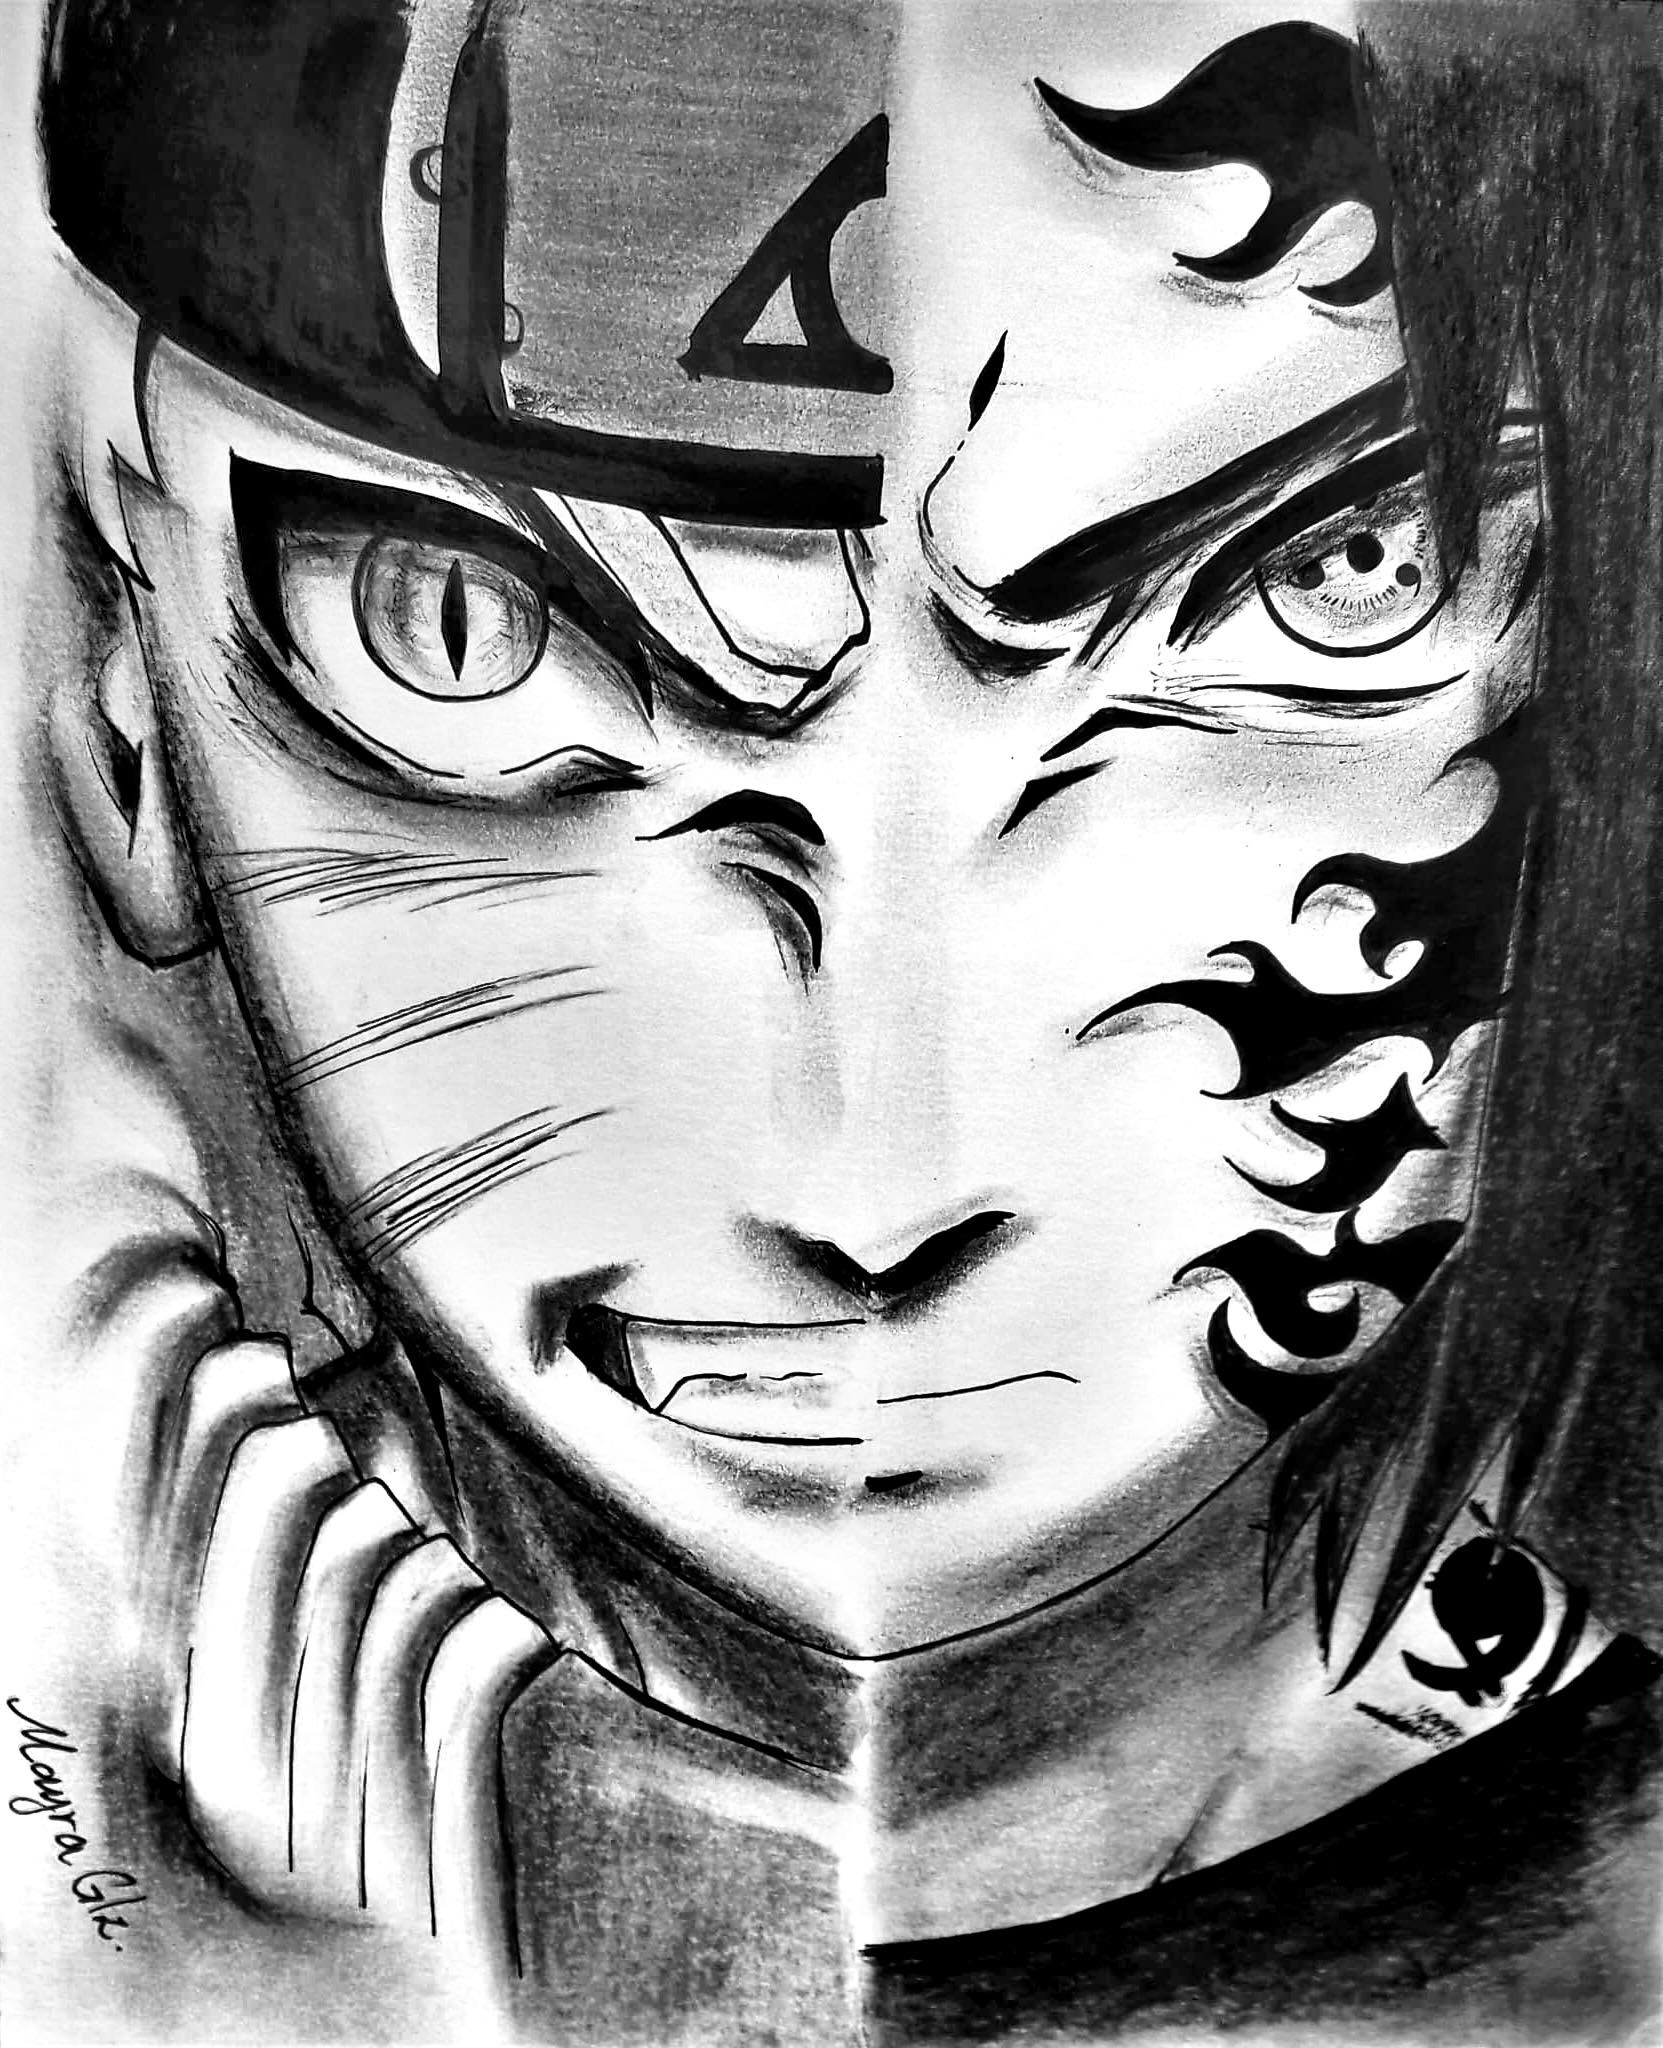 ArtStation - Naruto vs Sasuke. Portrait, Charcoal Drawing, Fan Art